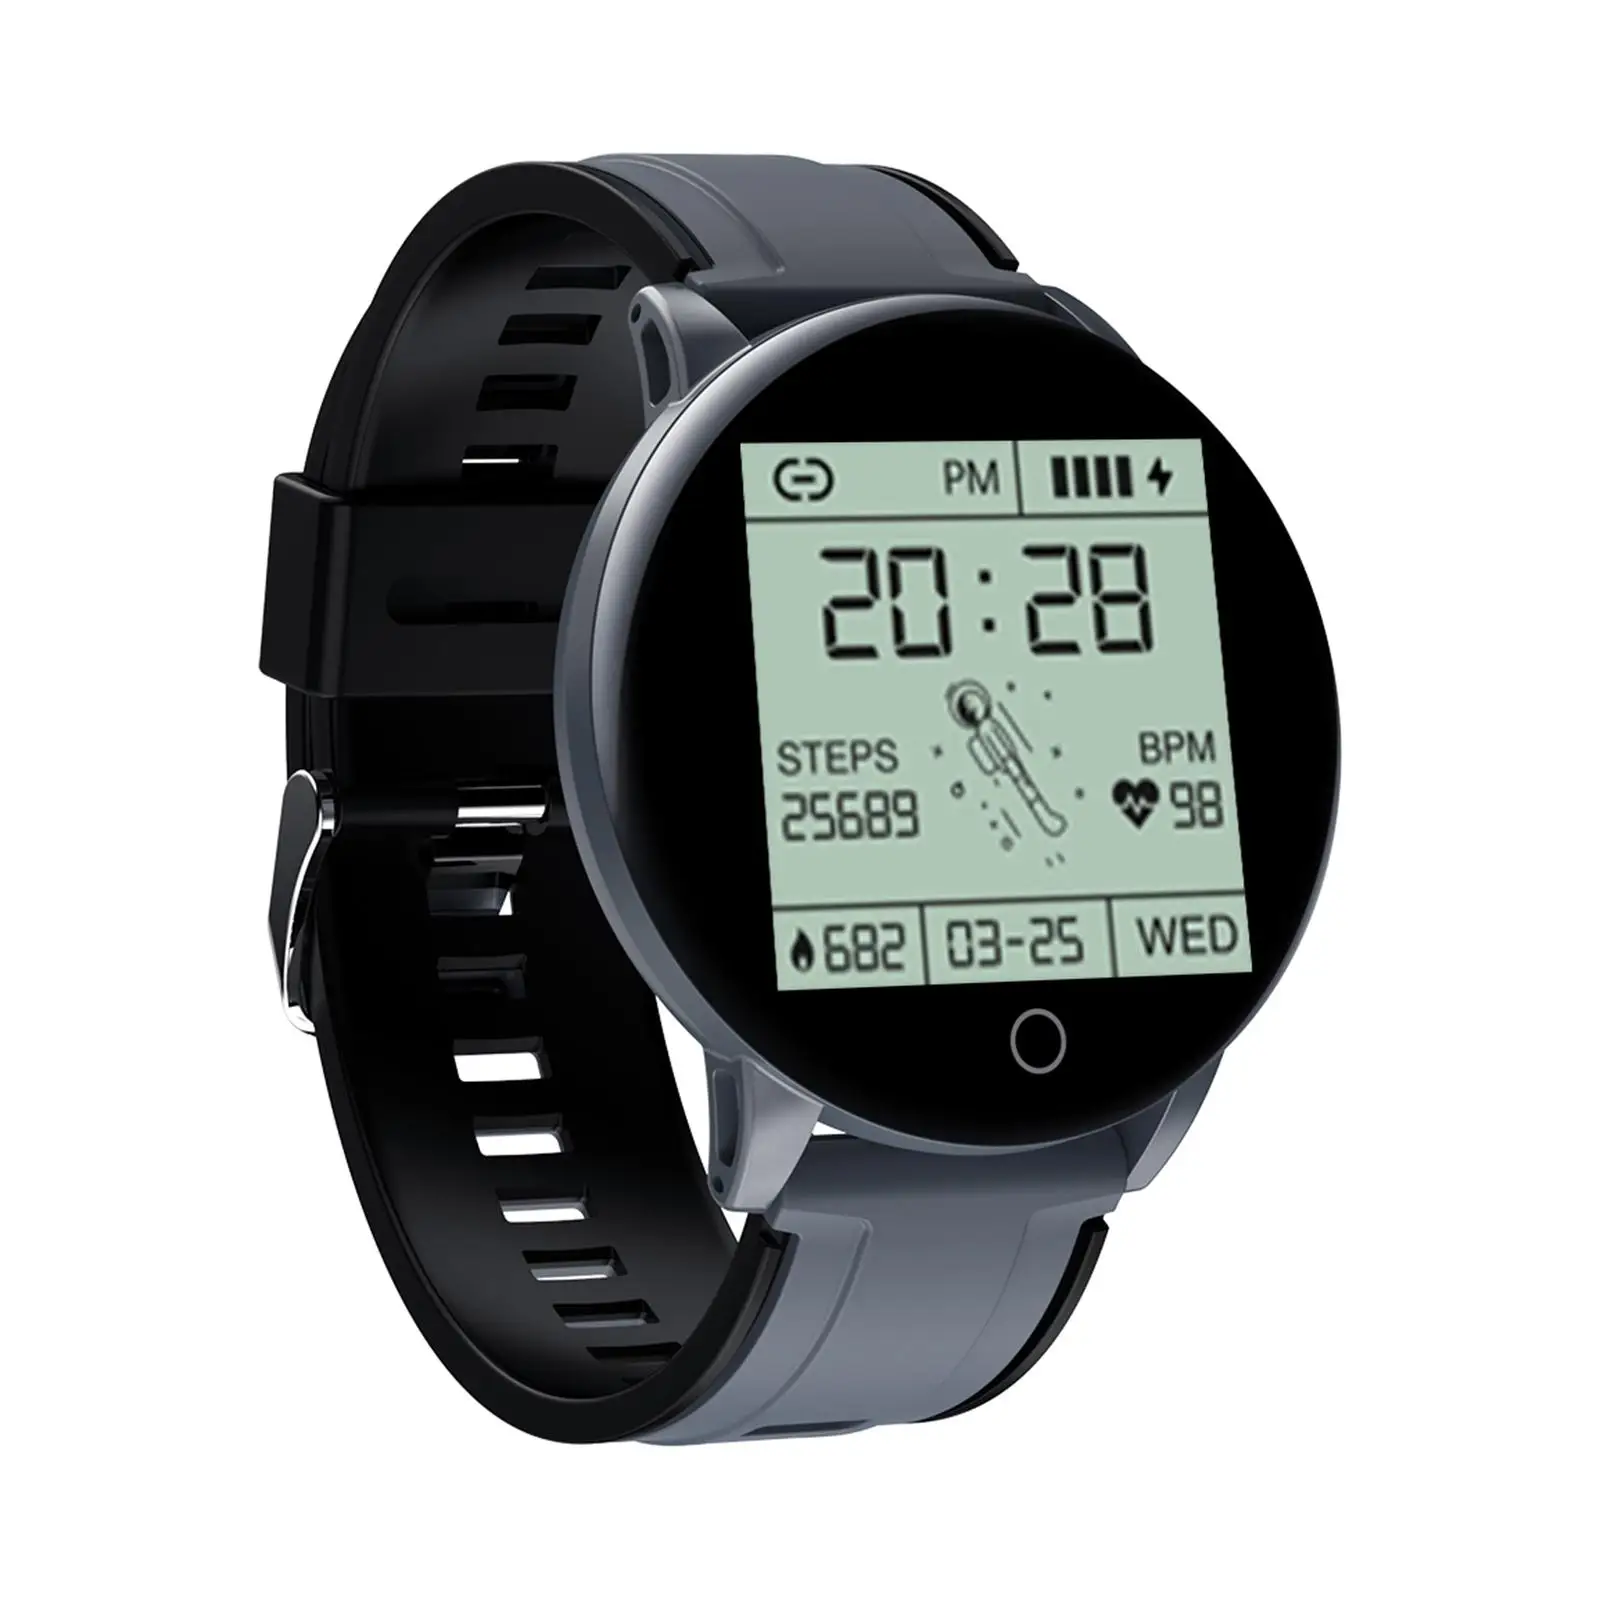 Smart Watch Bluetooth Blood Pressure Monitor for IP65 Waterproof Fitness